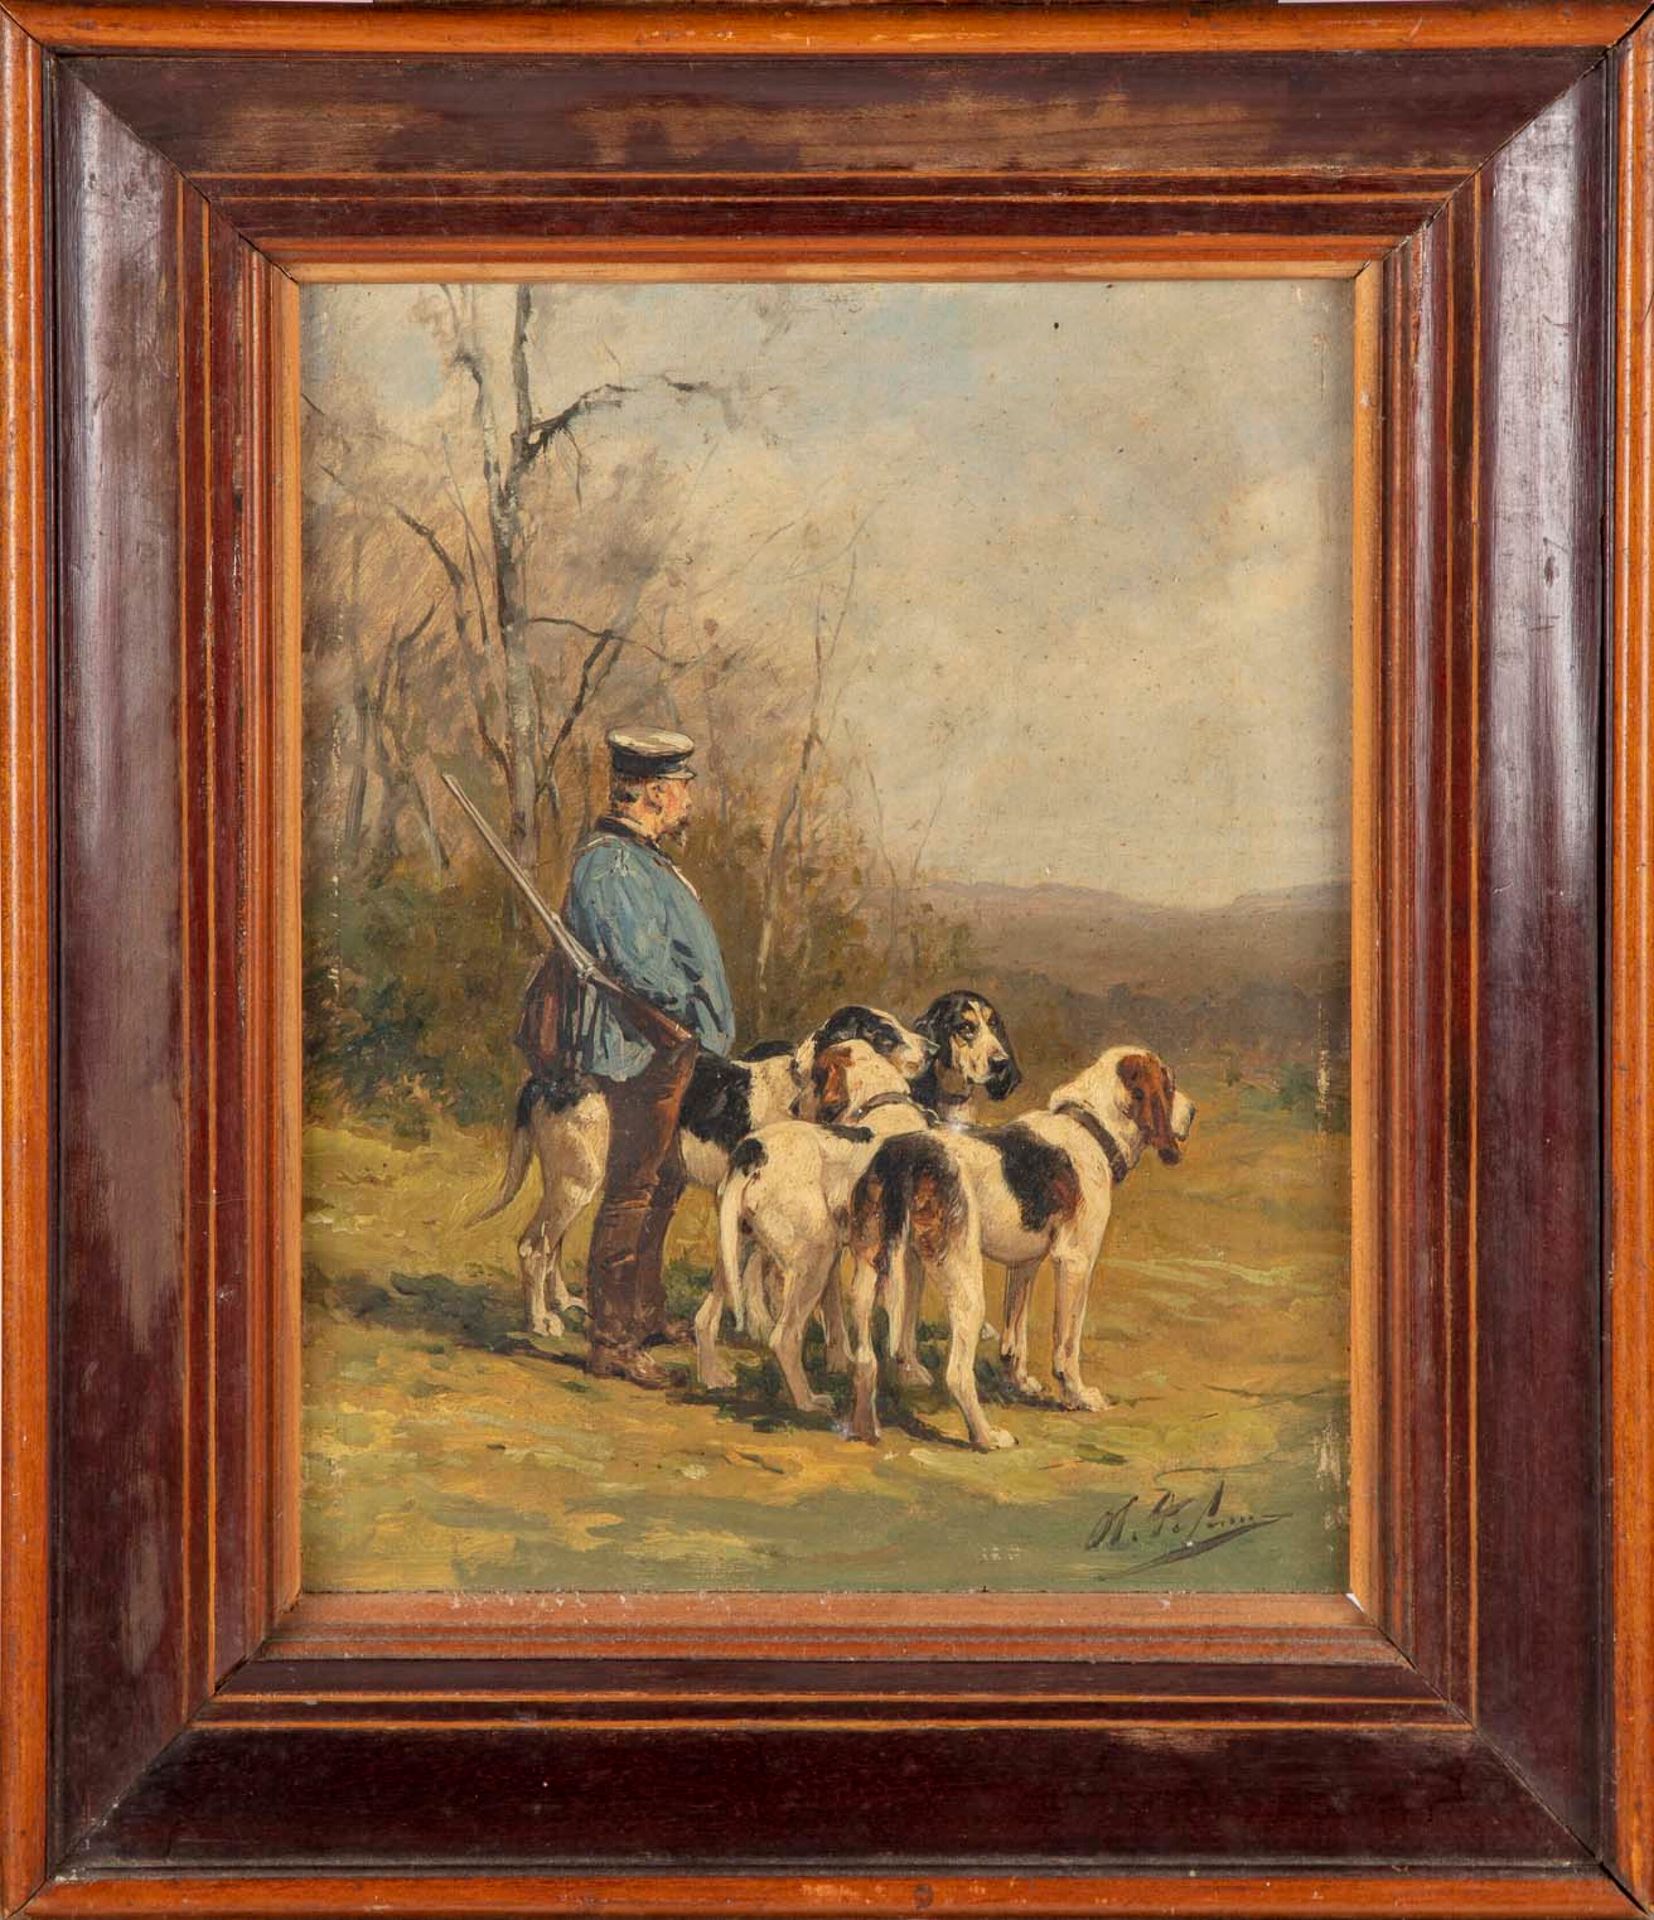 De Penne Olivier Charles de PENNE (1831-1897).

Hunter and his dogs

Hunting dog&hellip;